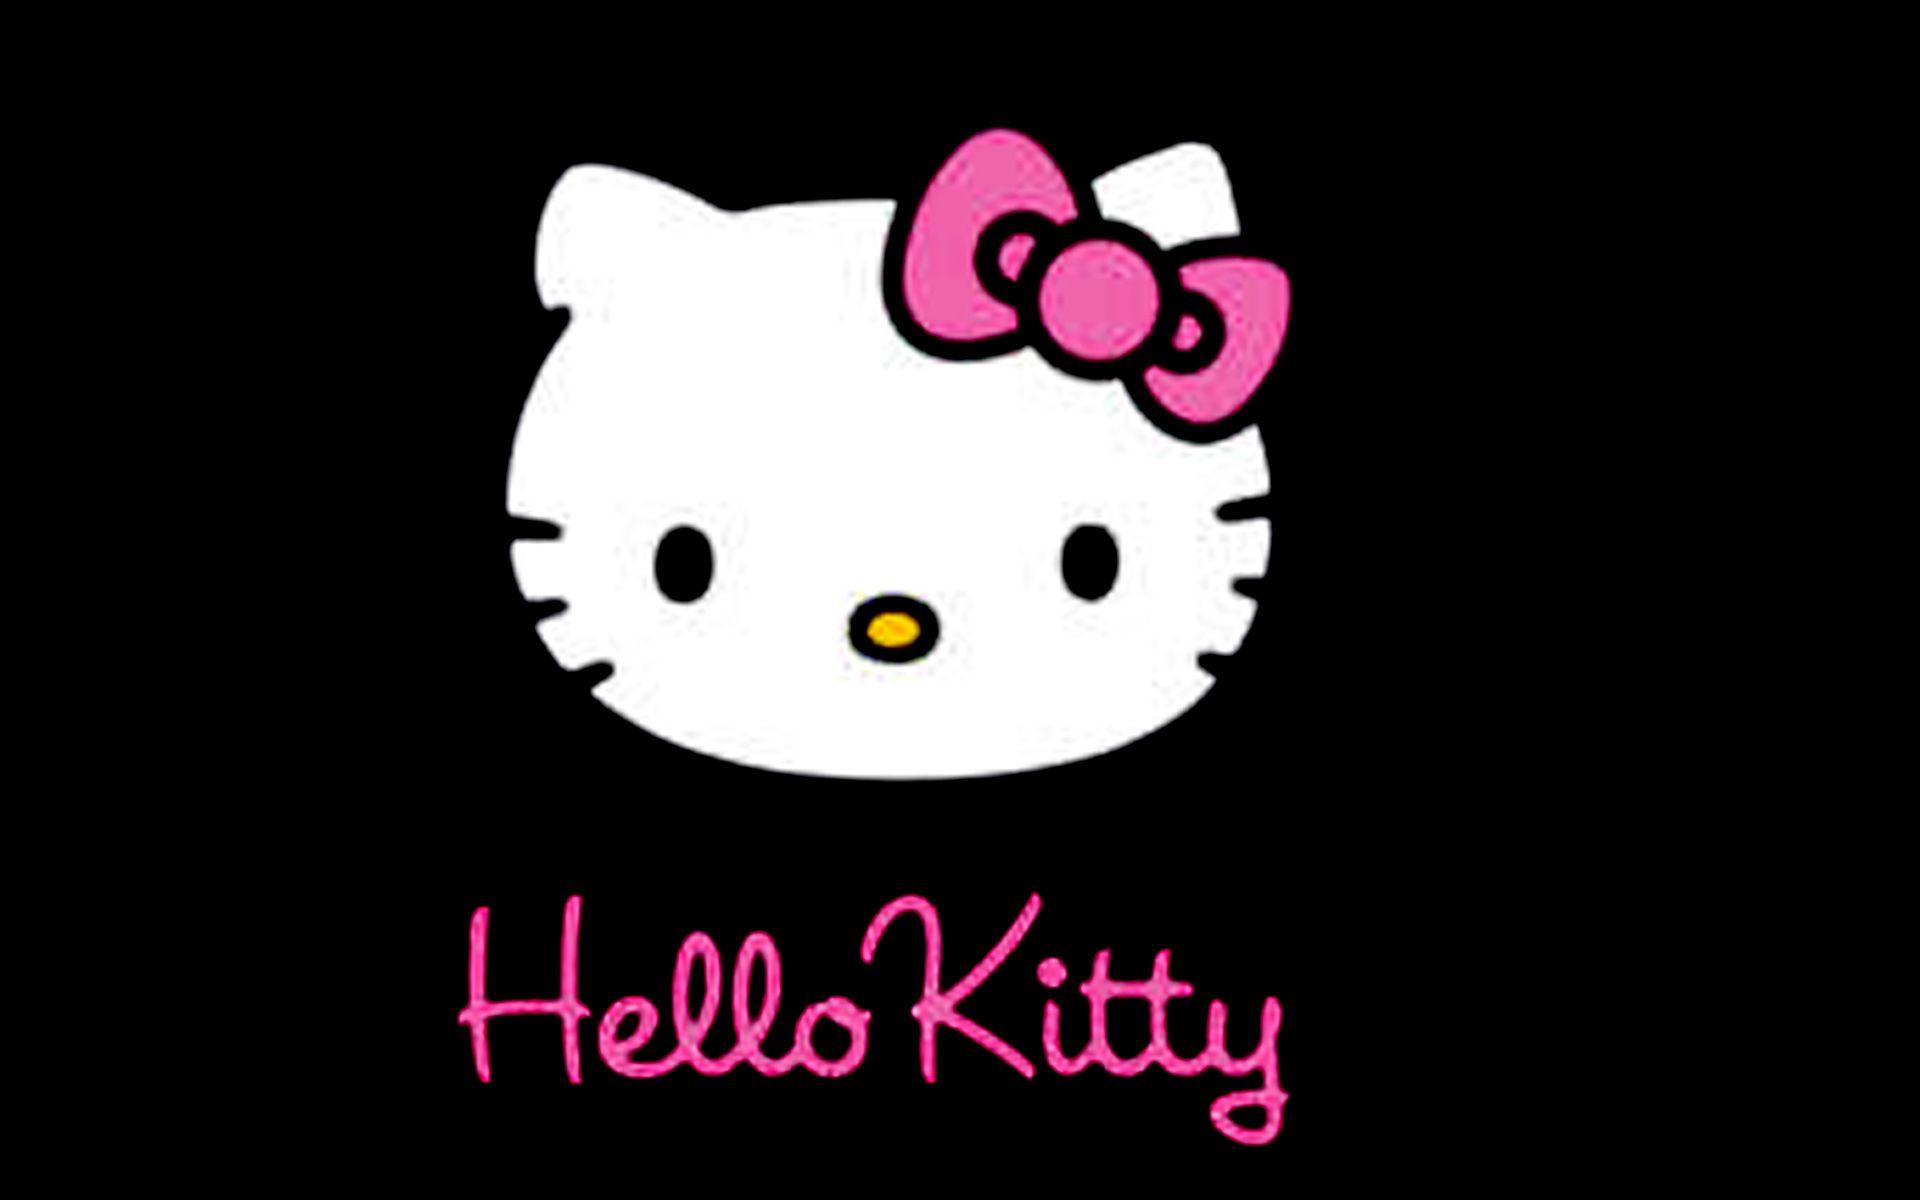 Hello Kitty Black Free Download 270403 Wallpaper. Cool